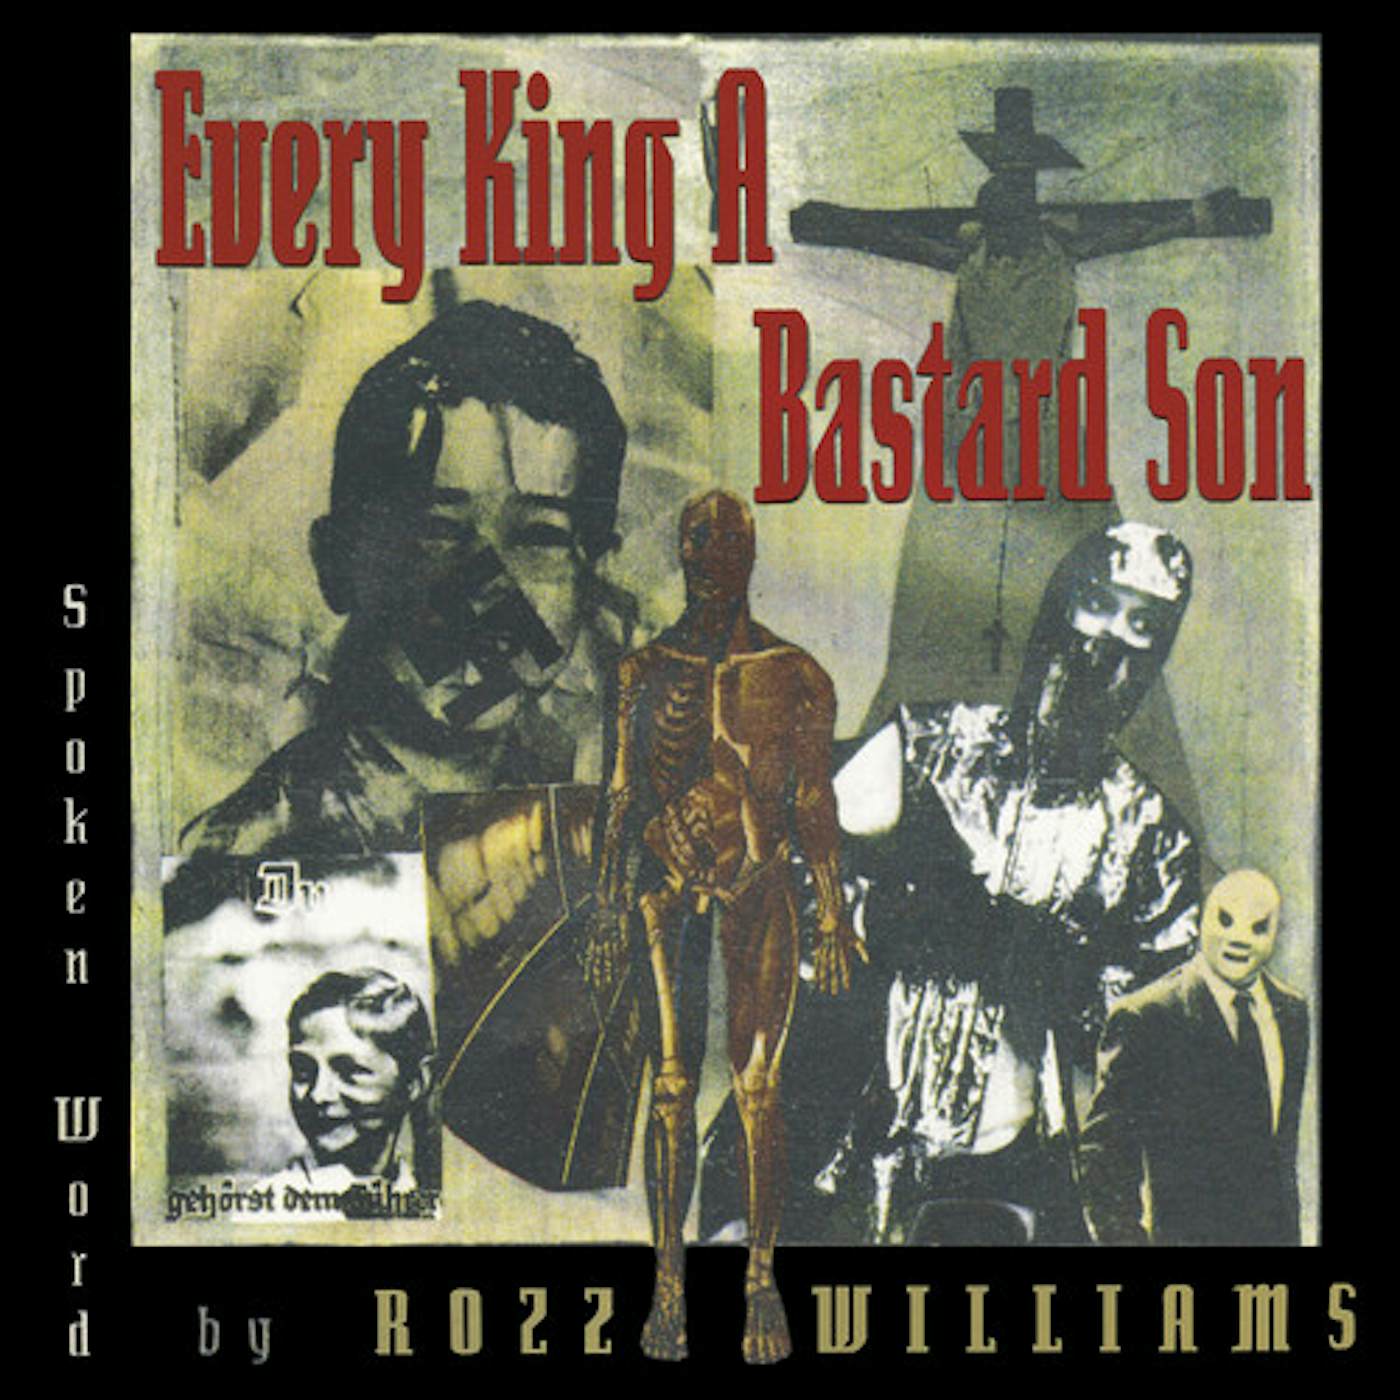 Rozz Williams EVERY KING A BASTARD SON Vinyl Record